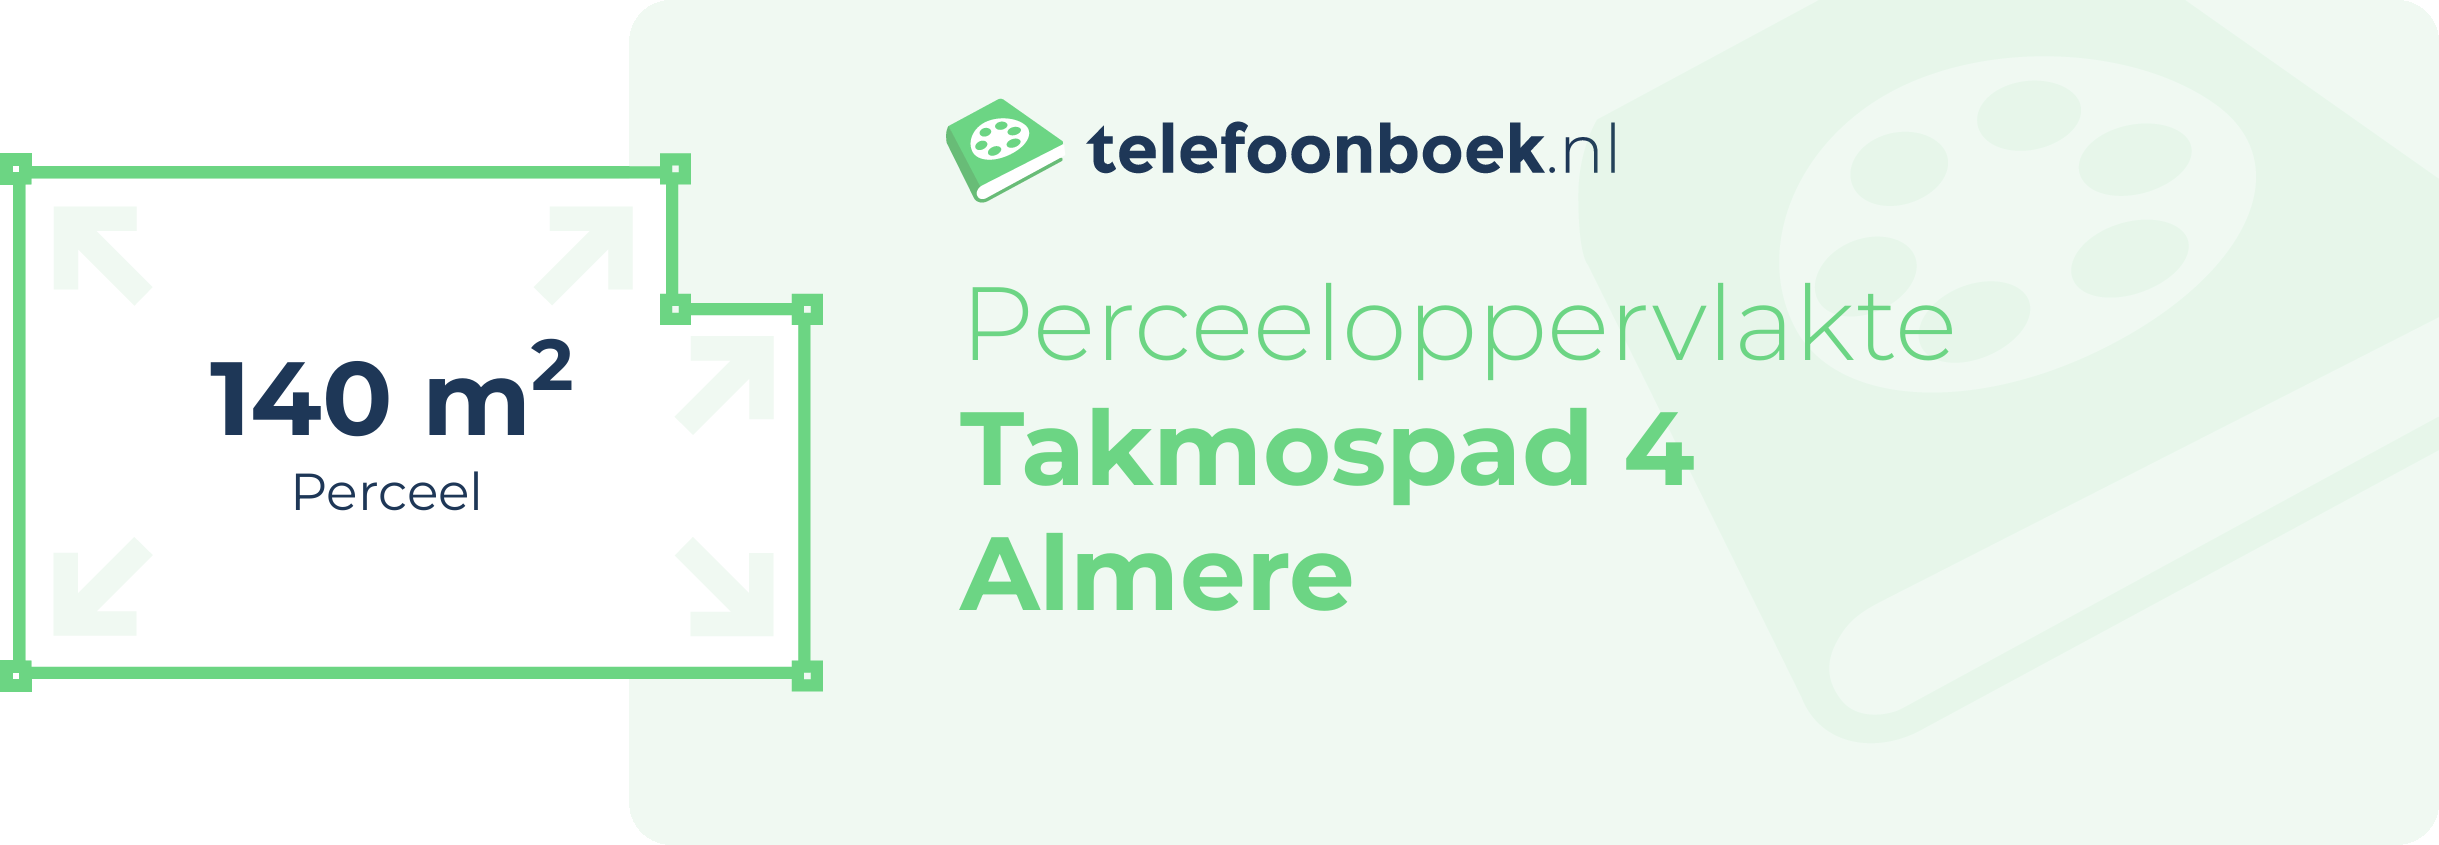 Perceeloppervlakte Takmospad 4 Almere